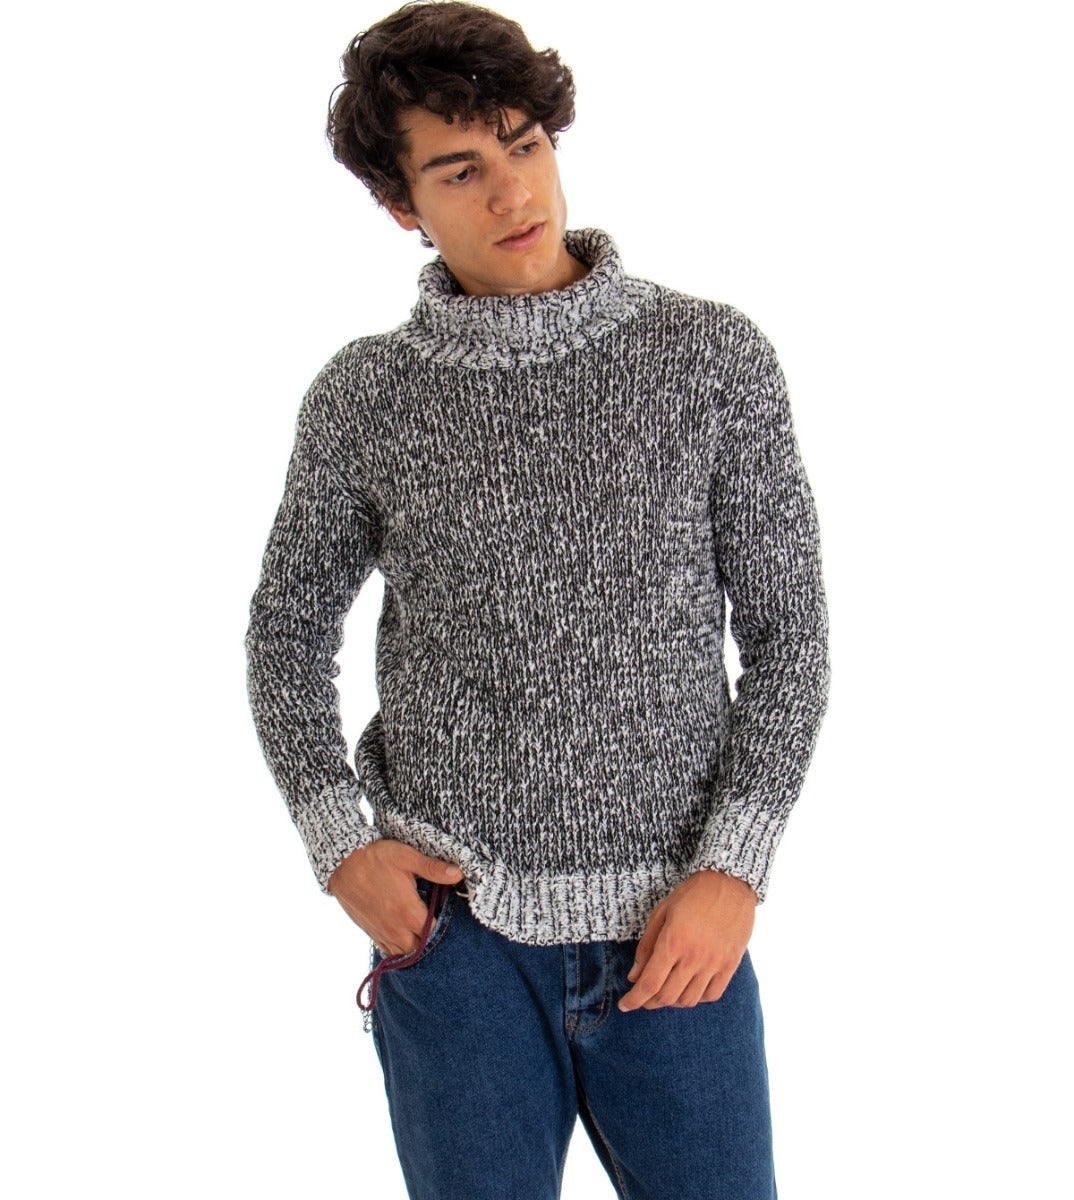 Paul Barrell Men's Turtleneck Sweater Two-Tone Black GIOSAL Shirt